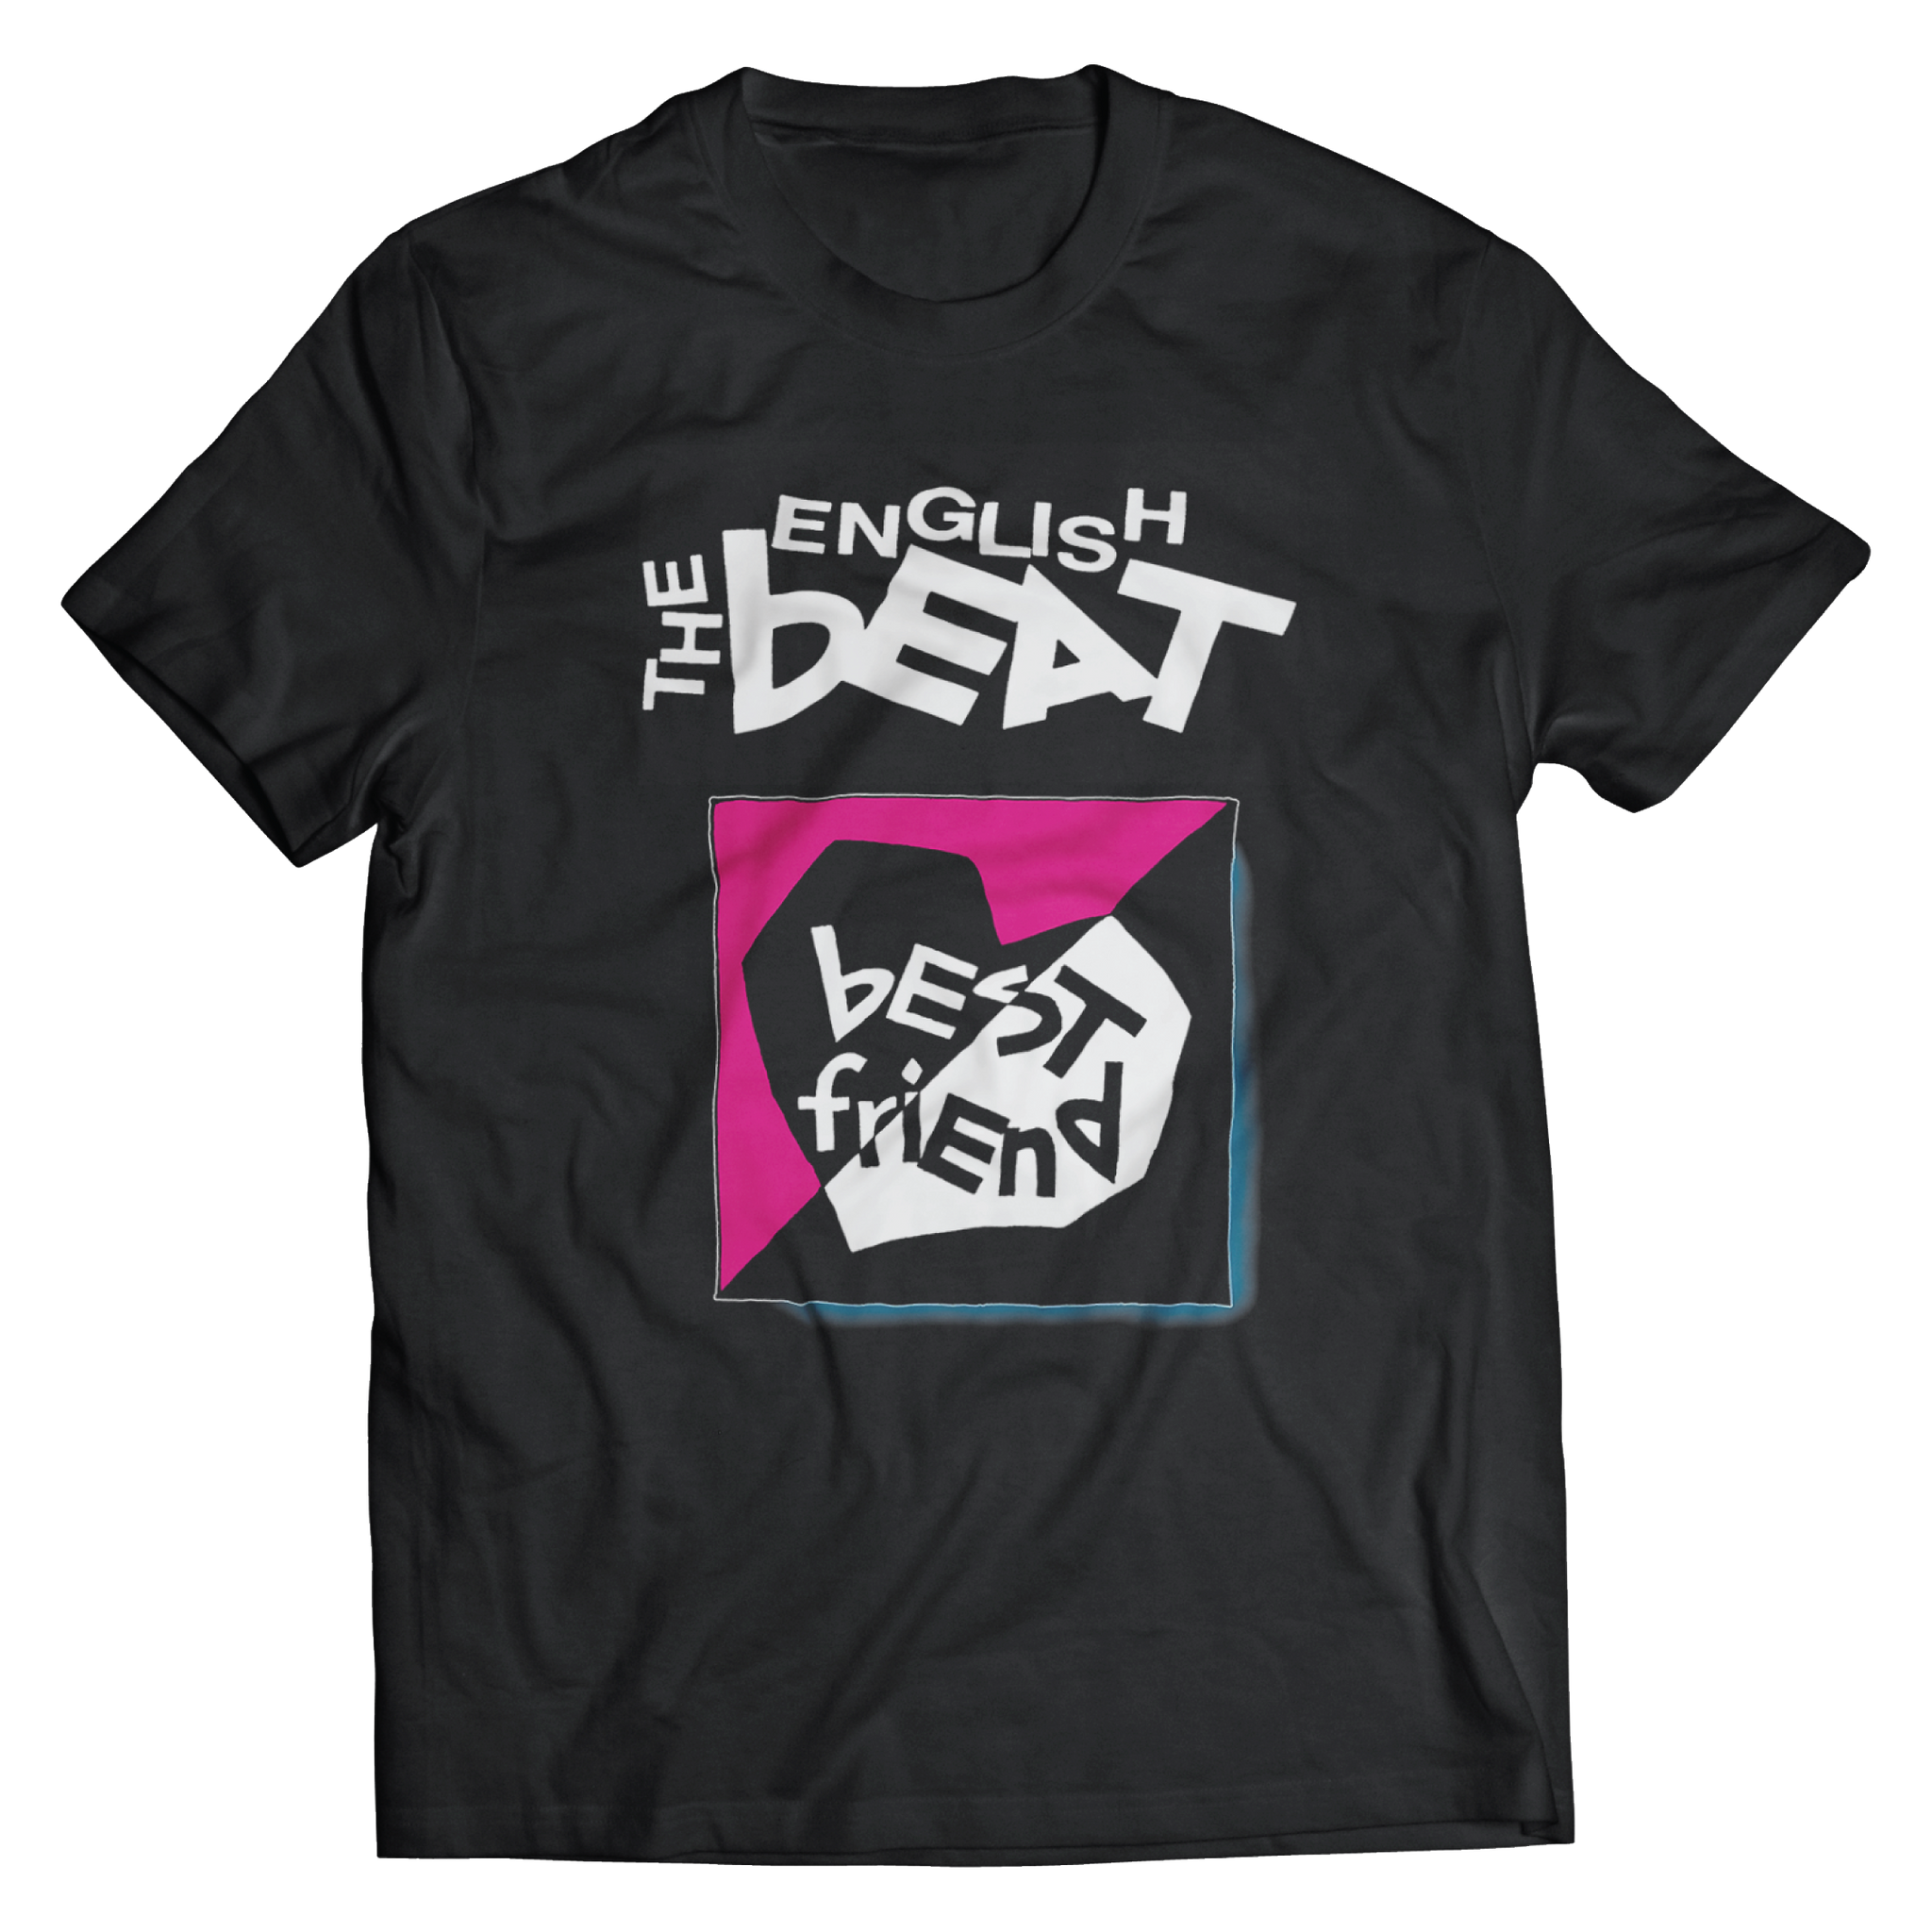 ENGLISH BEAT "BEST FRIEND" T-SHIRT